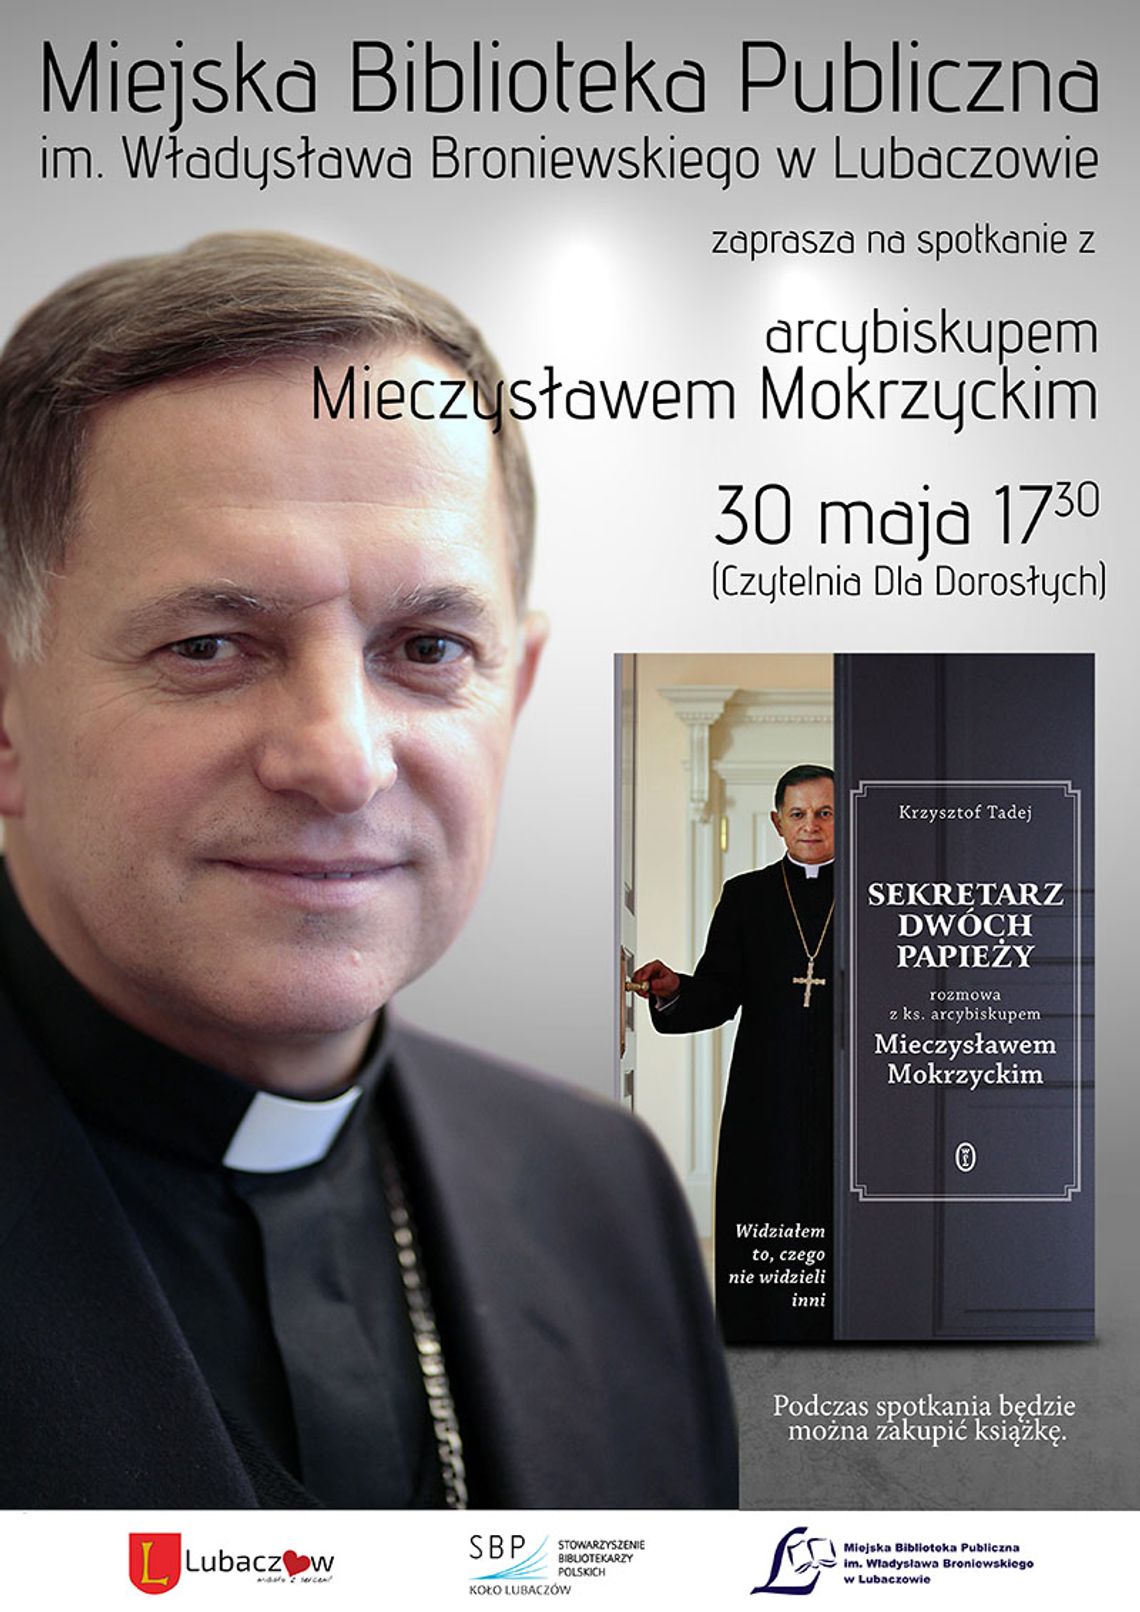 Spotkanie z arcybiskupem Mokrzyckim